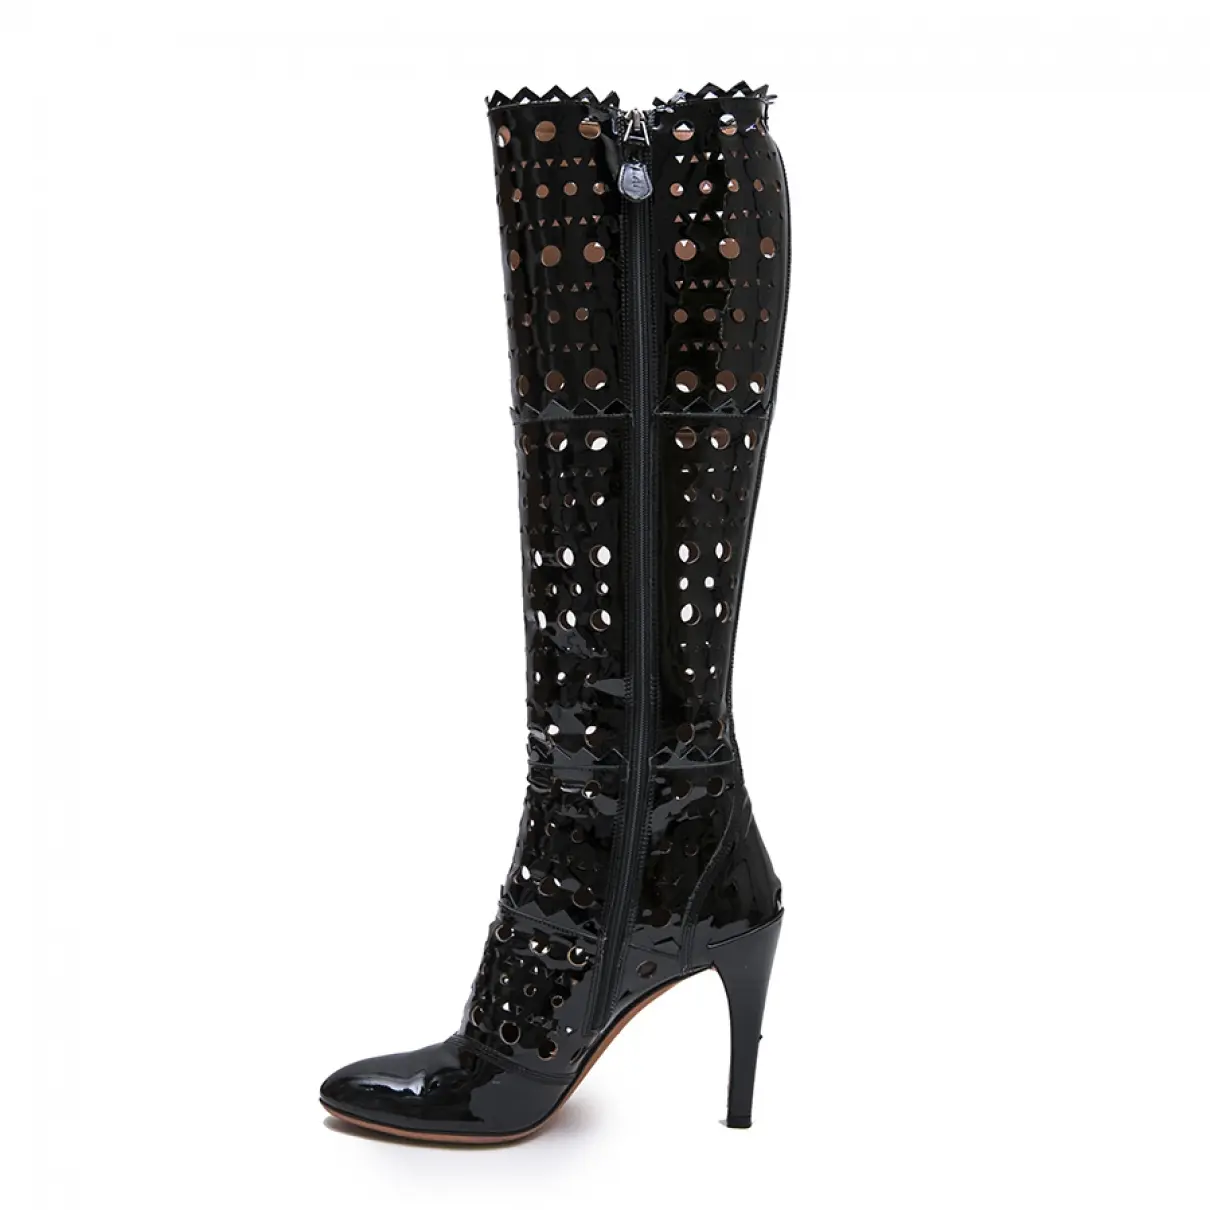 Alaïa Patent leather boots for sale